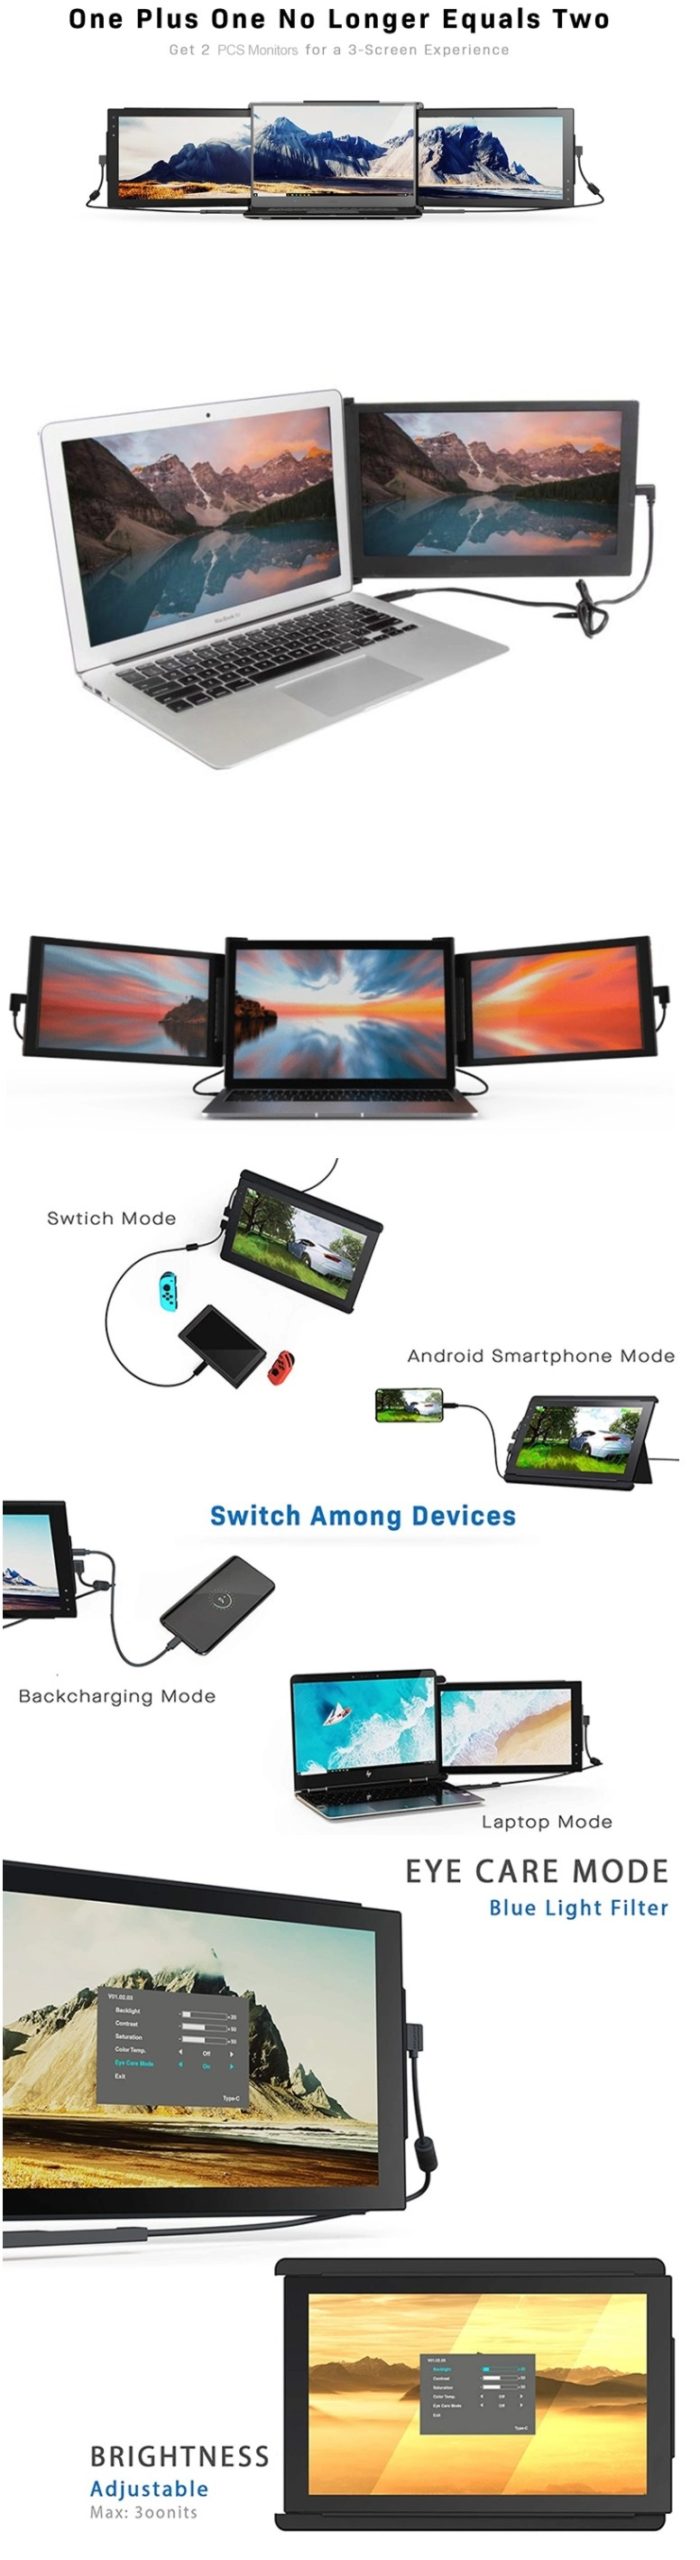 External Triple Diplay, Triple Display Screen, Portable External Monitor, External Monitor Display, Xebec Tri-Screen, Dancesoul 13.3 inch Monitor, Laptop Expandable Screen, Slide Portable Monitor,